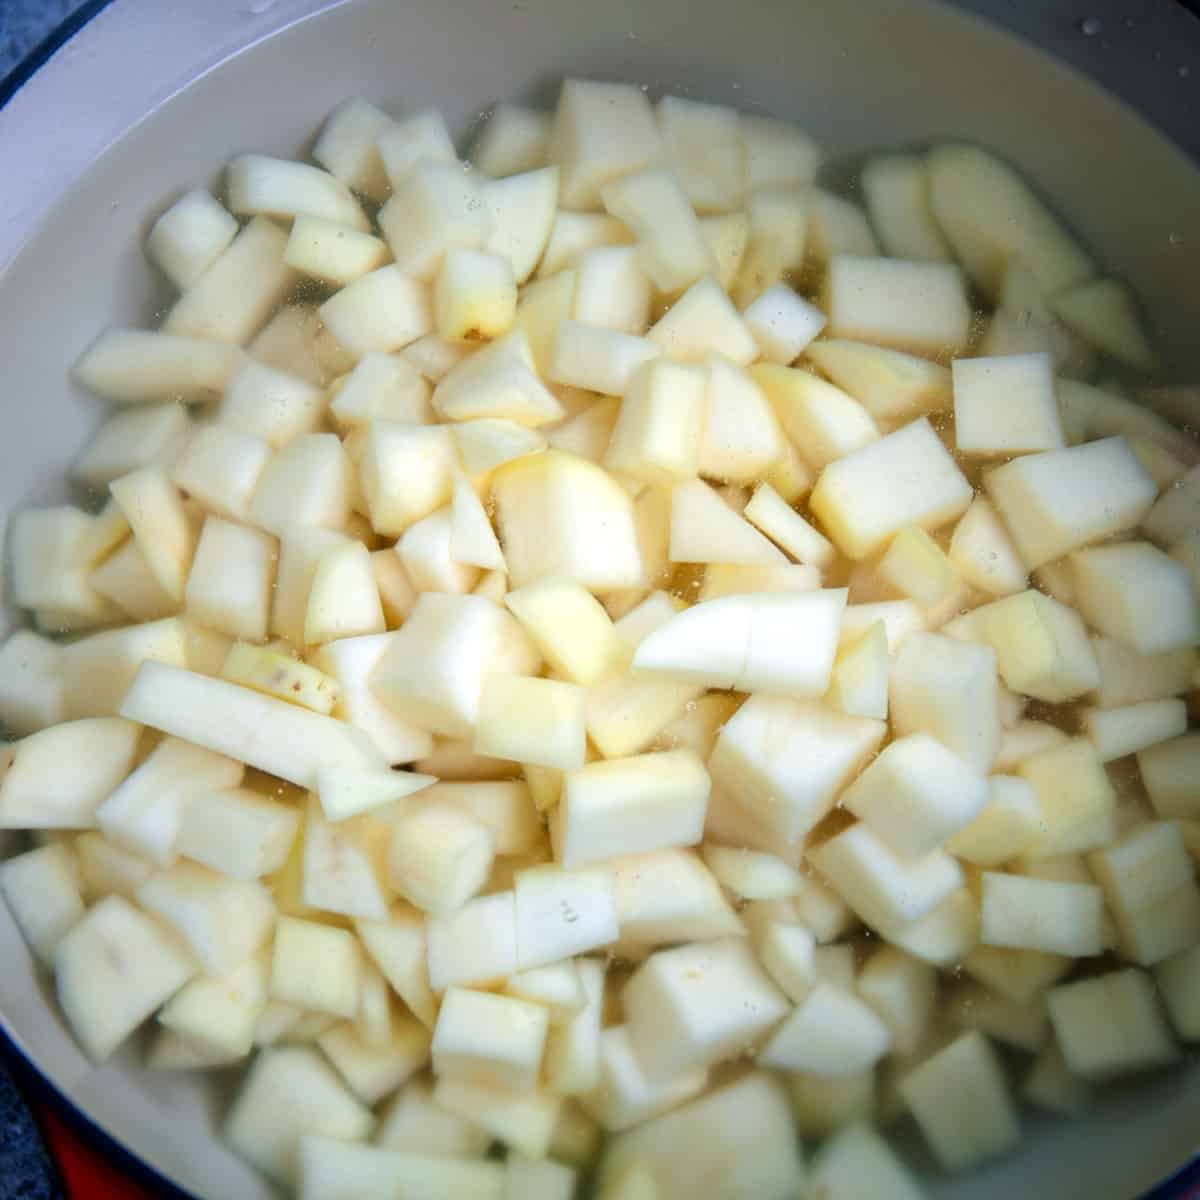 Cut potatoes soaking in water.